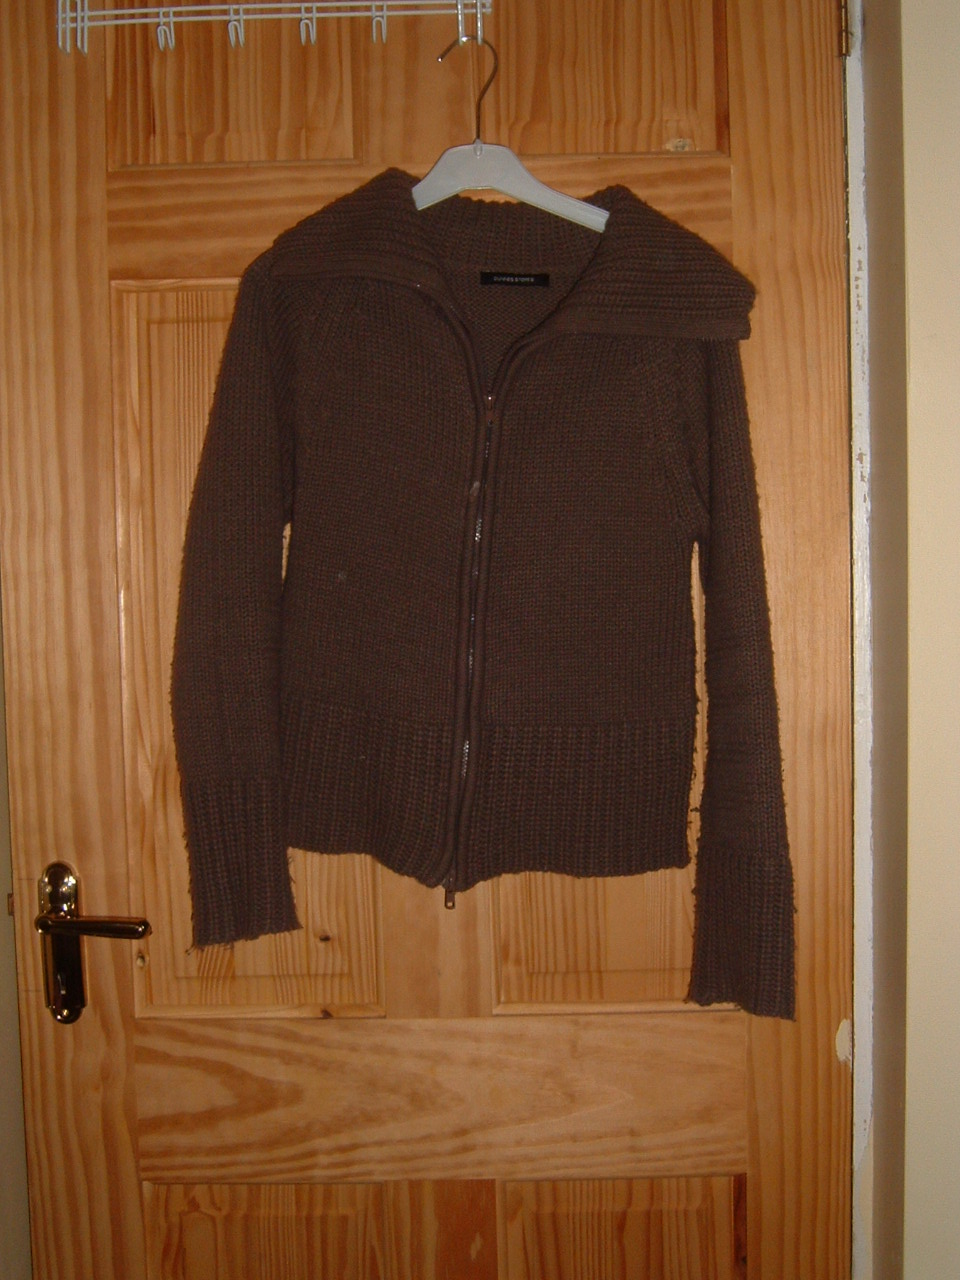 http://corkmosquefundraising.files.wordpress.com/2008/09/l06-brown-sweater-front.jpg